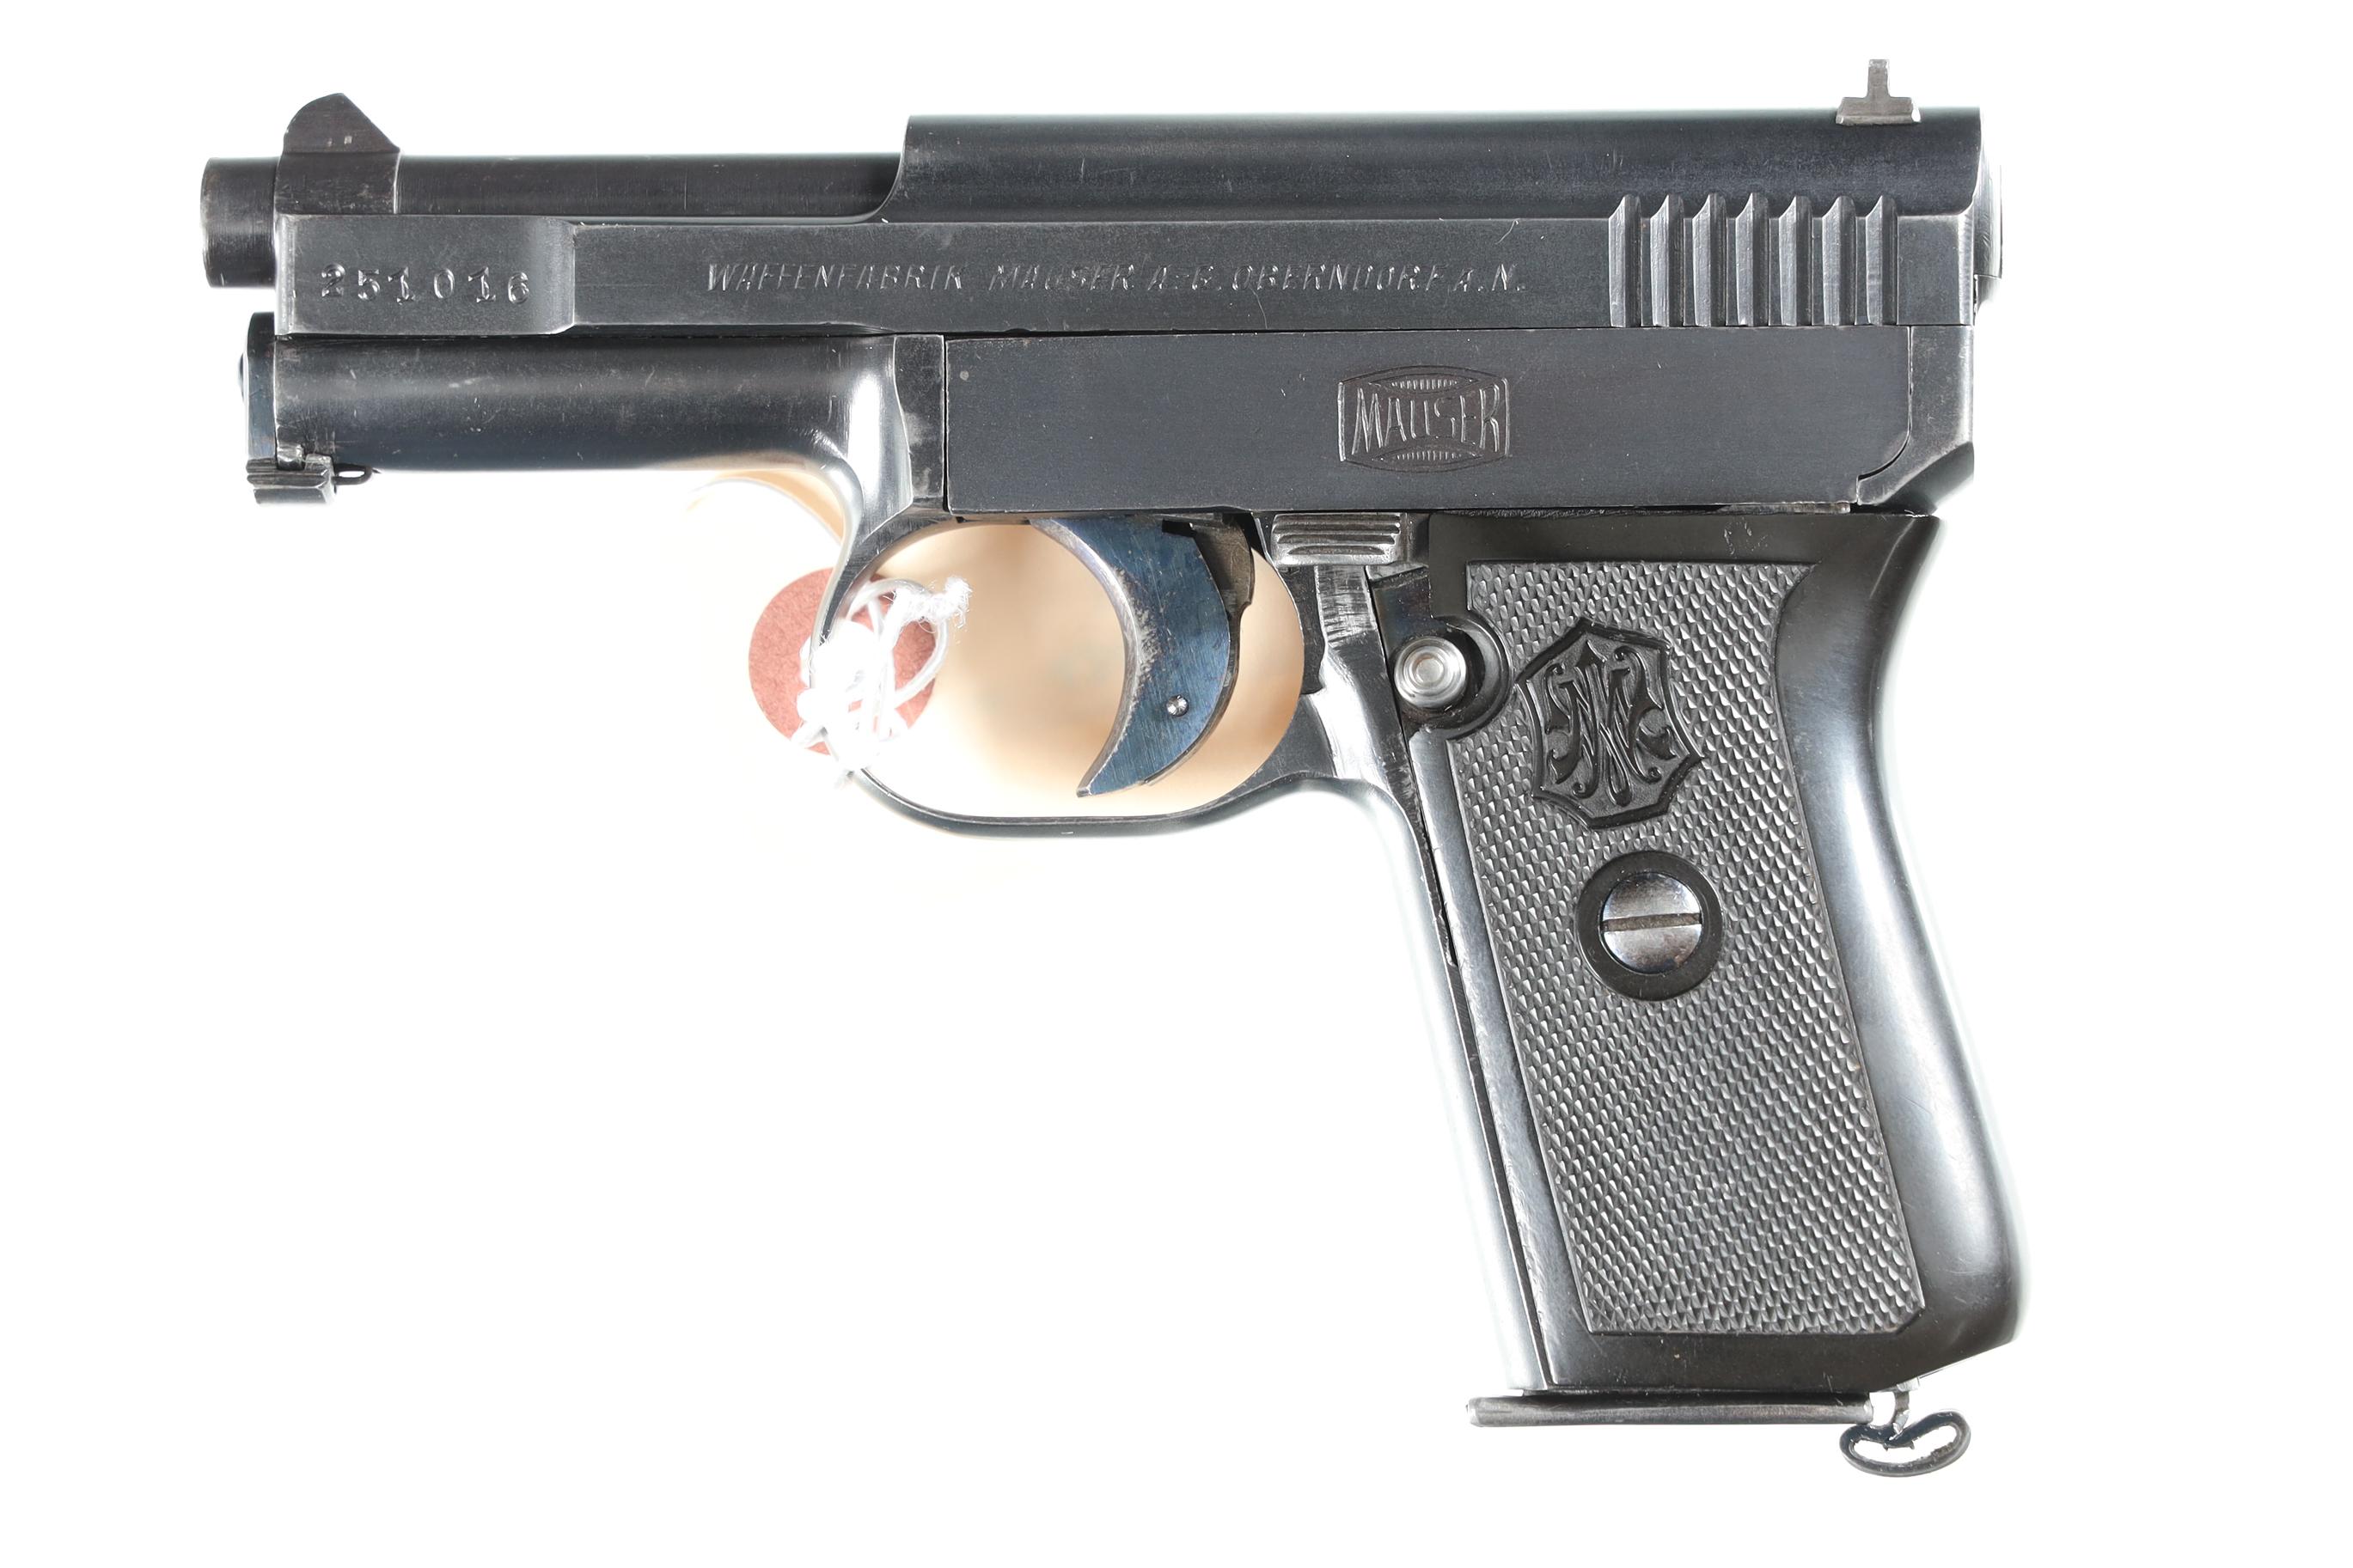 Mauser 1910 Pistol 6.35 mm auto